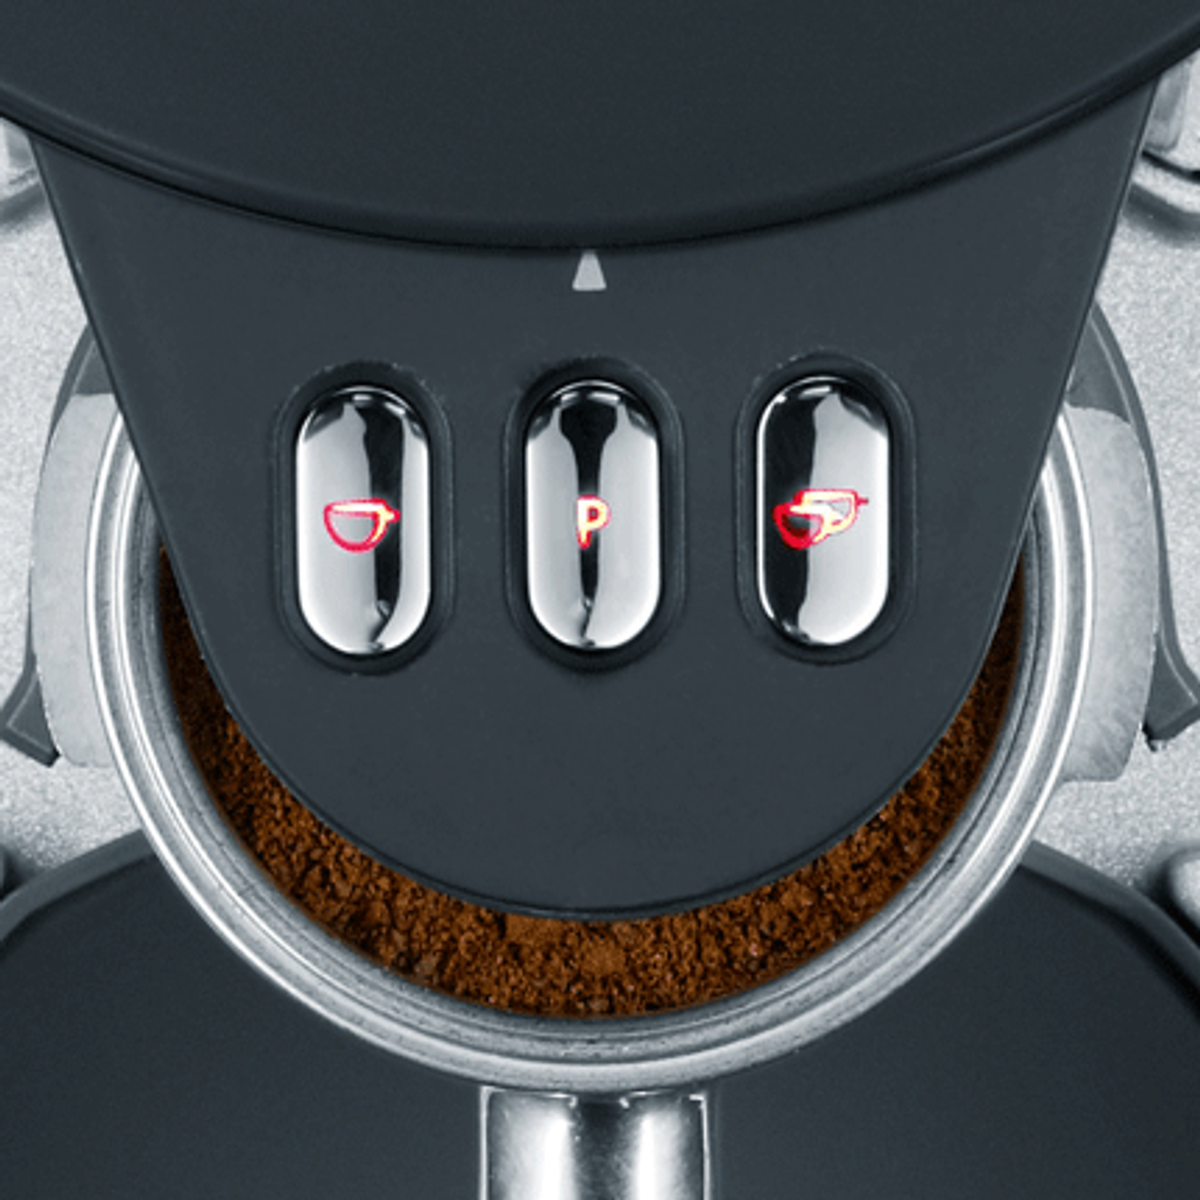 GRAEF (128 Edelstahl-Kegelmahlwerk) KAFFEEMÜHLE 900 Silber CM Watt, Kaffeemühle EU